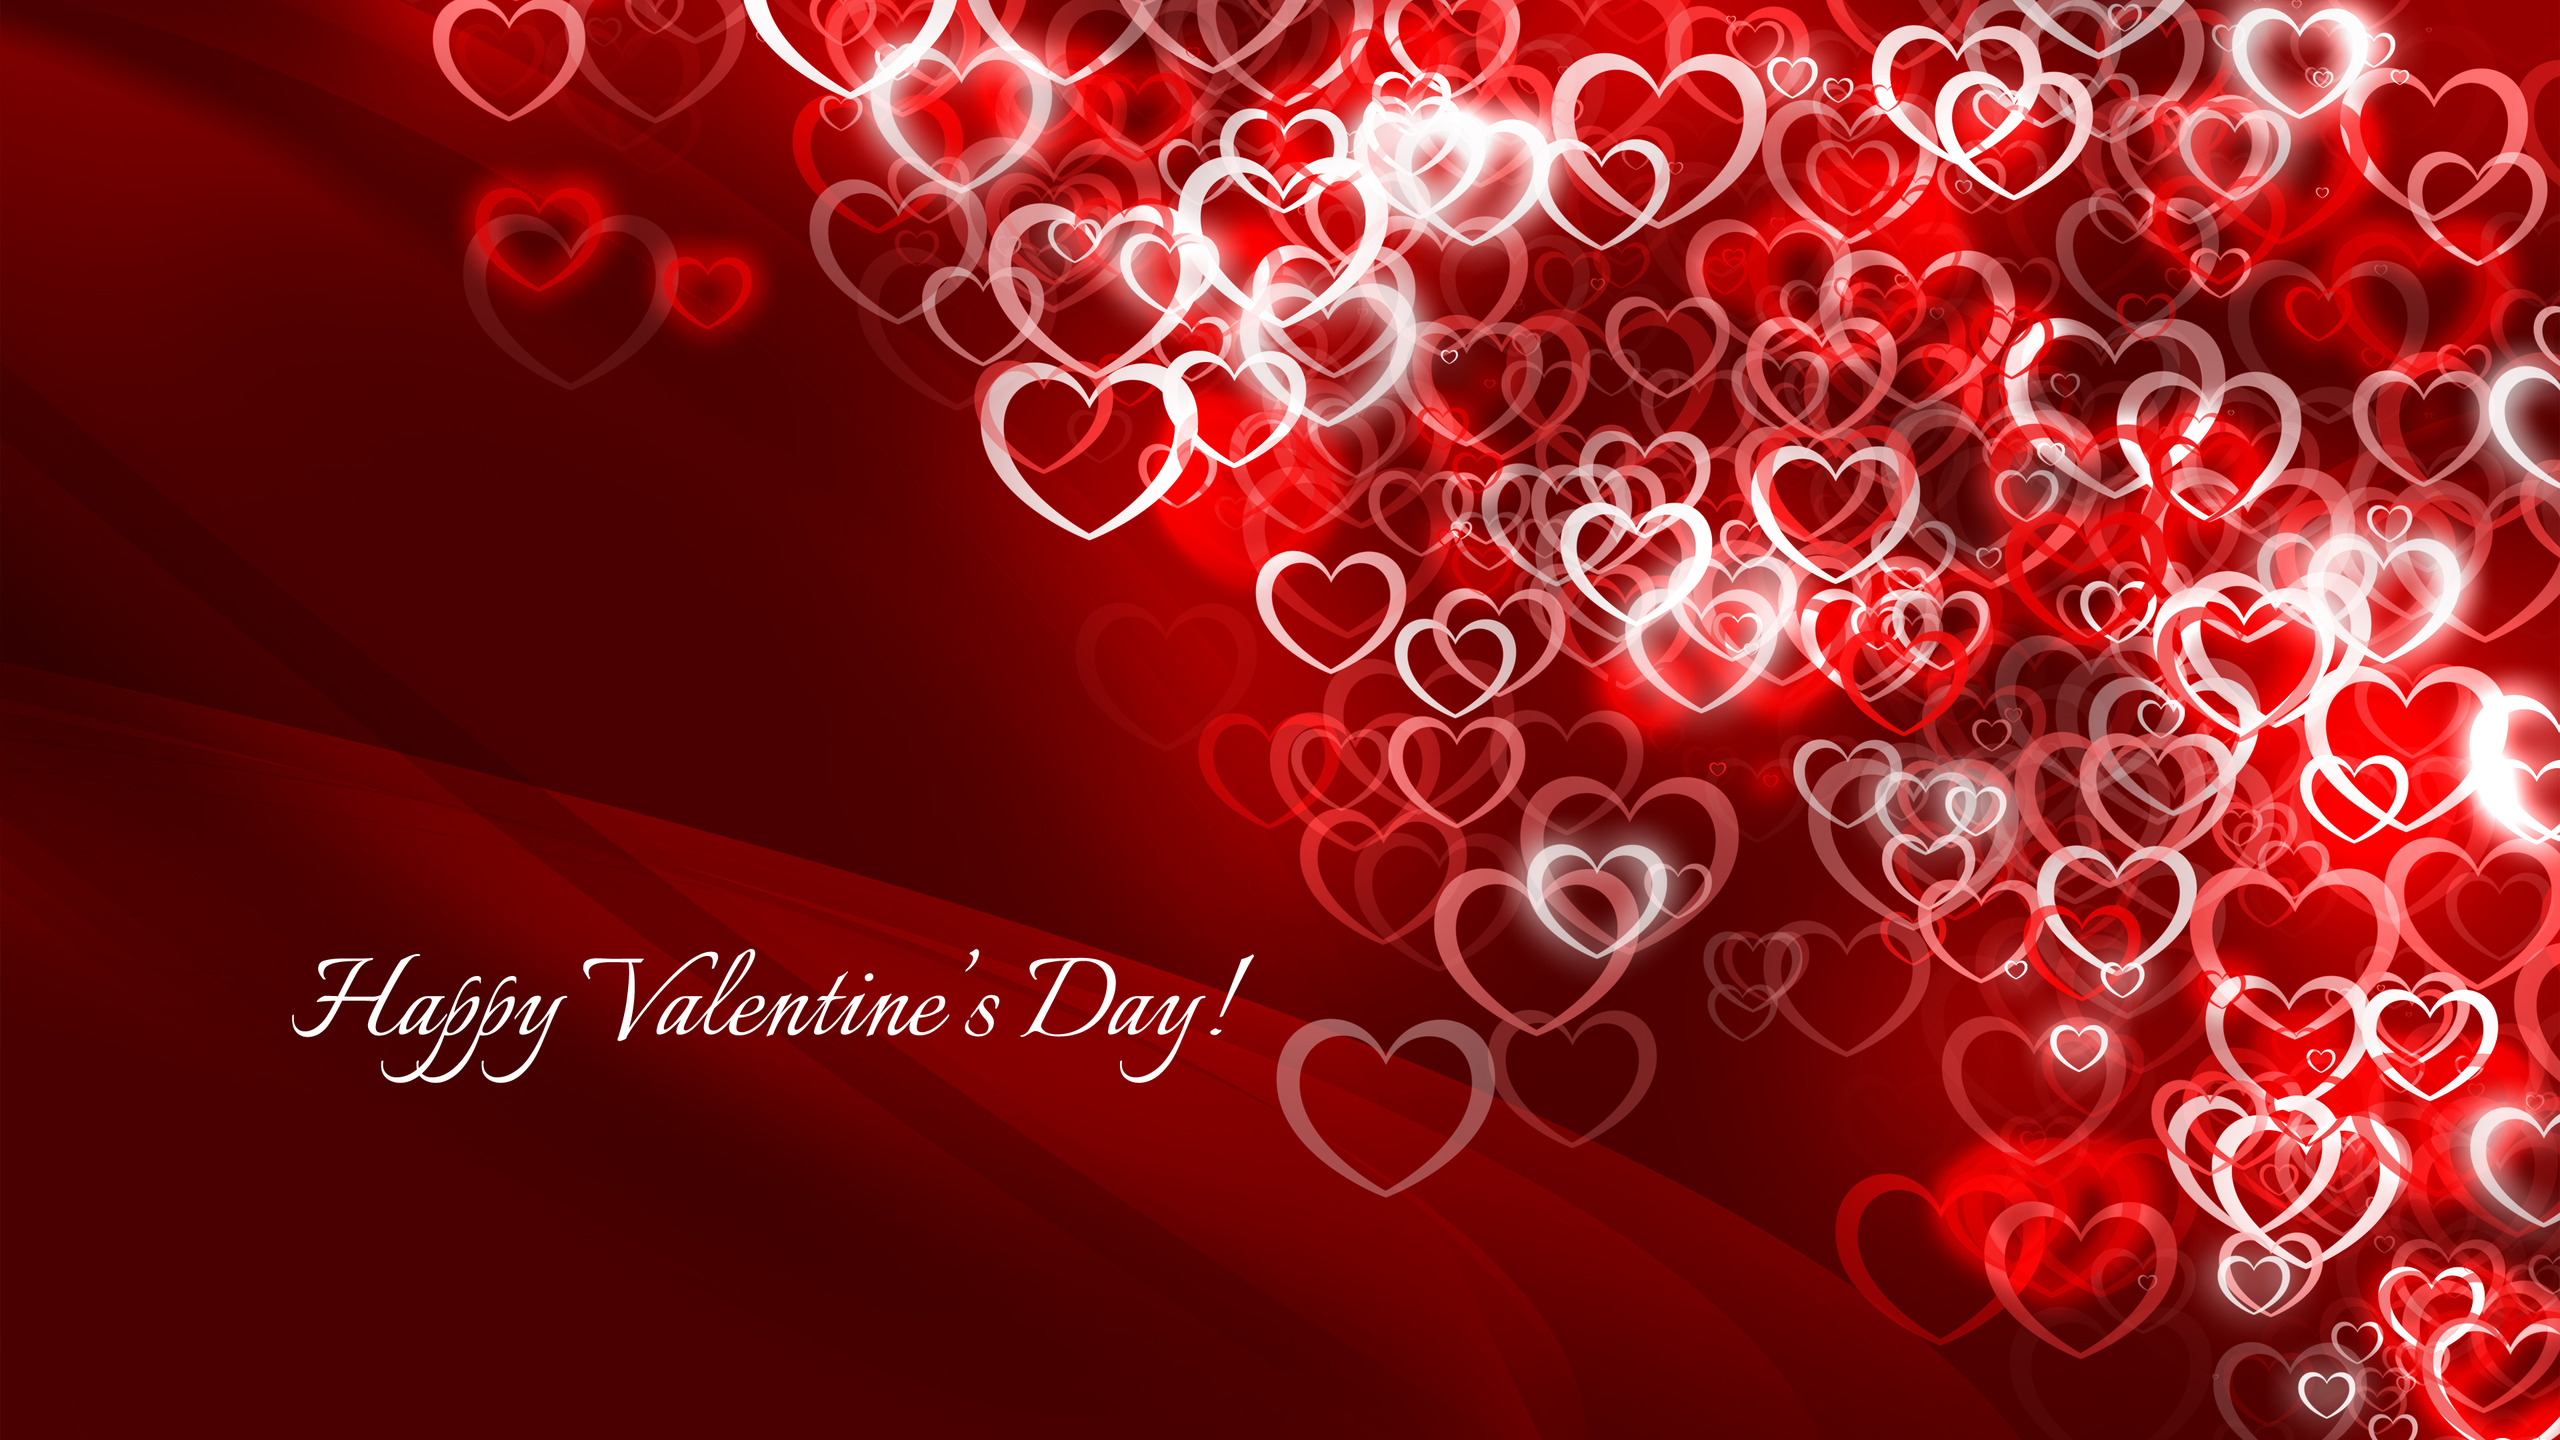 Happy Valentine S Day Image Wallpaper On